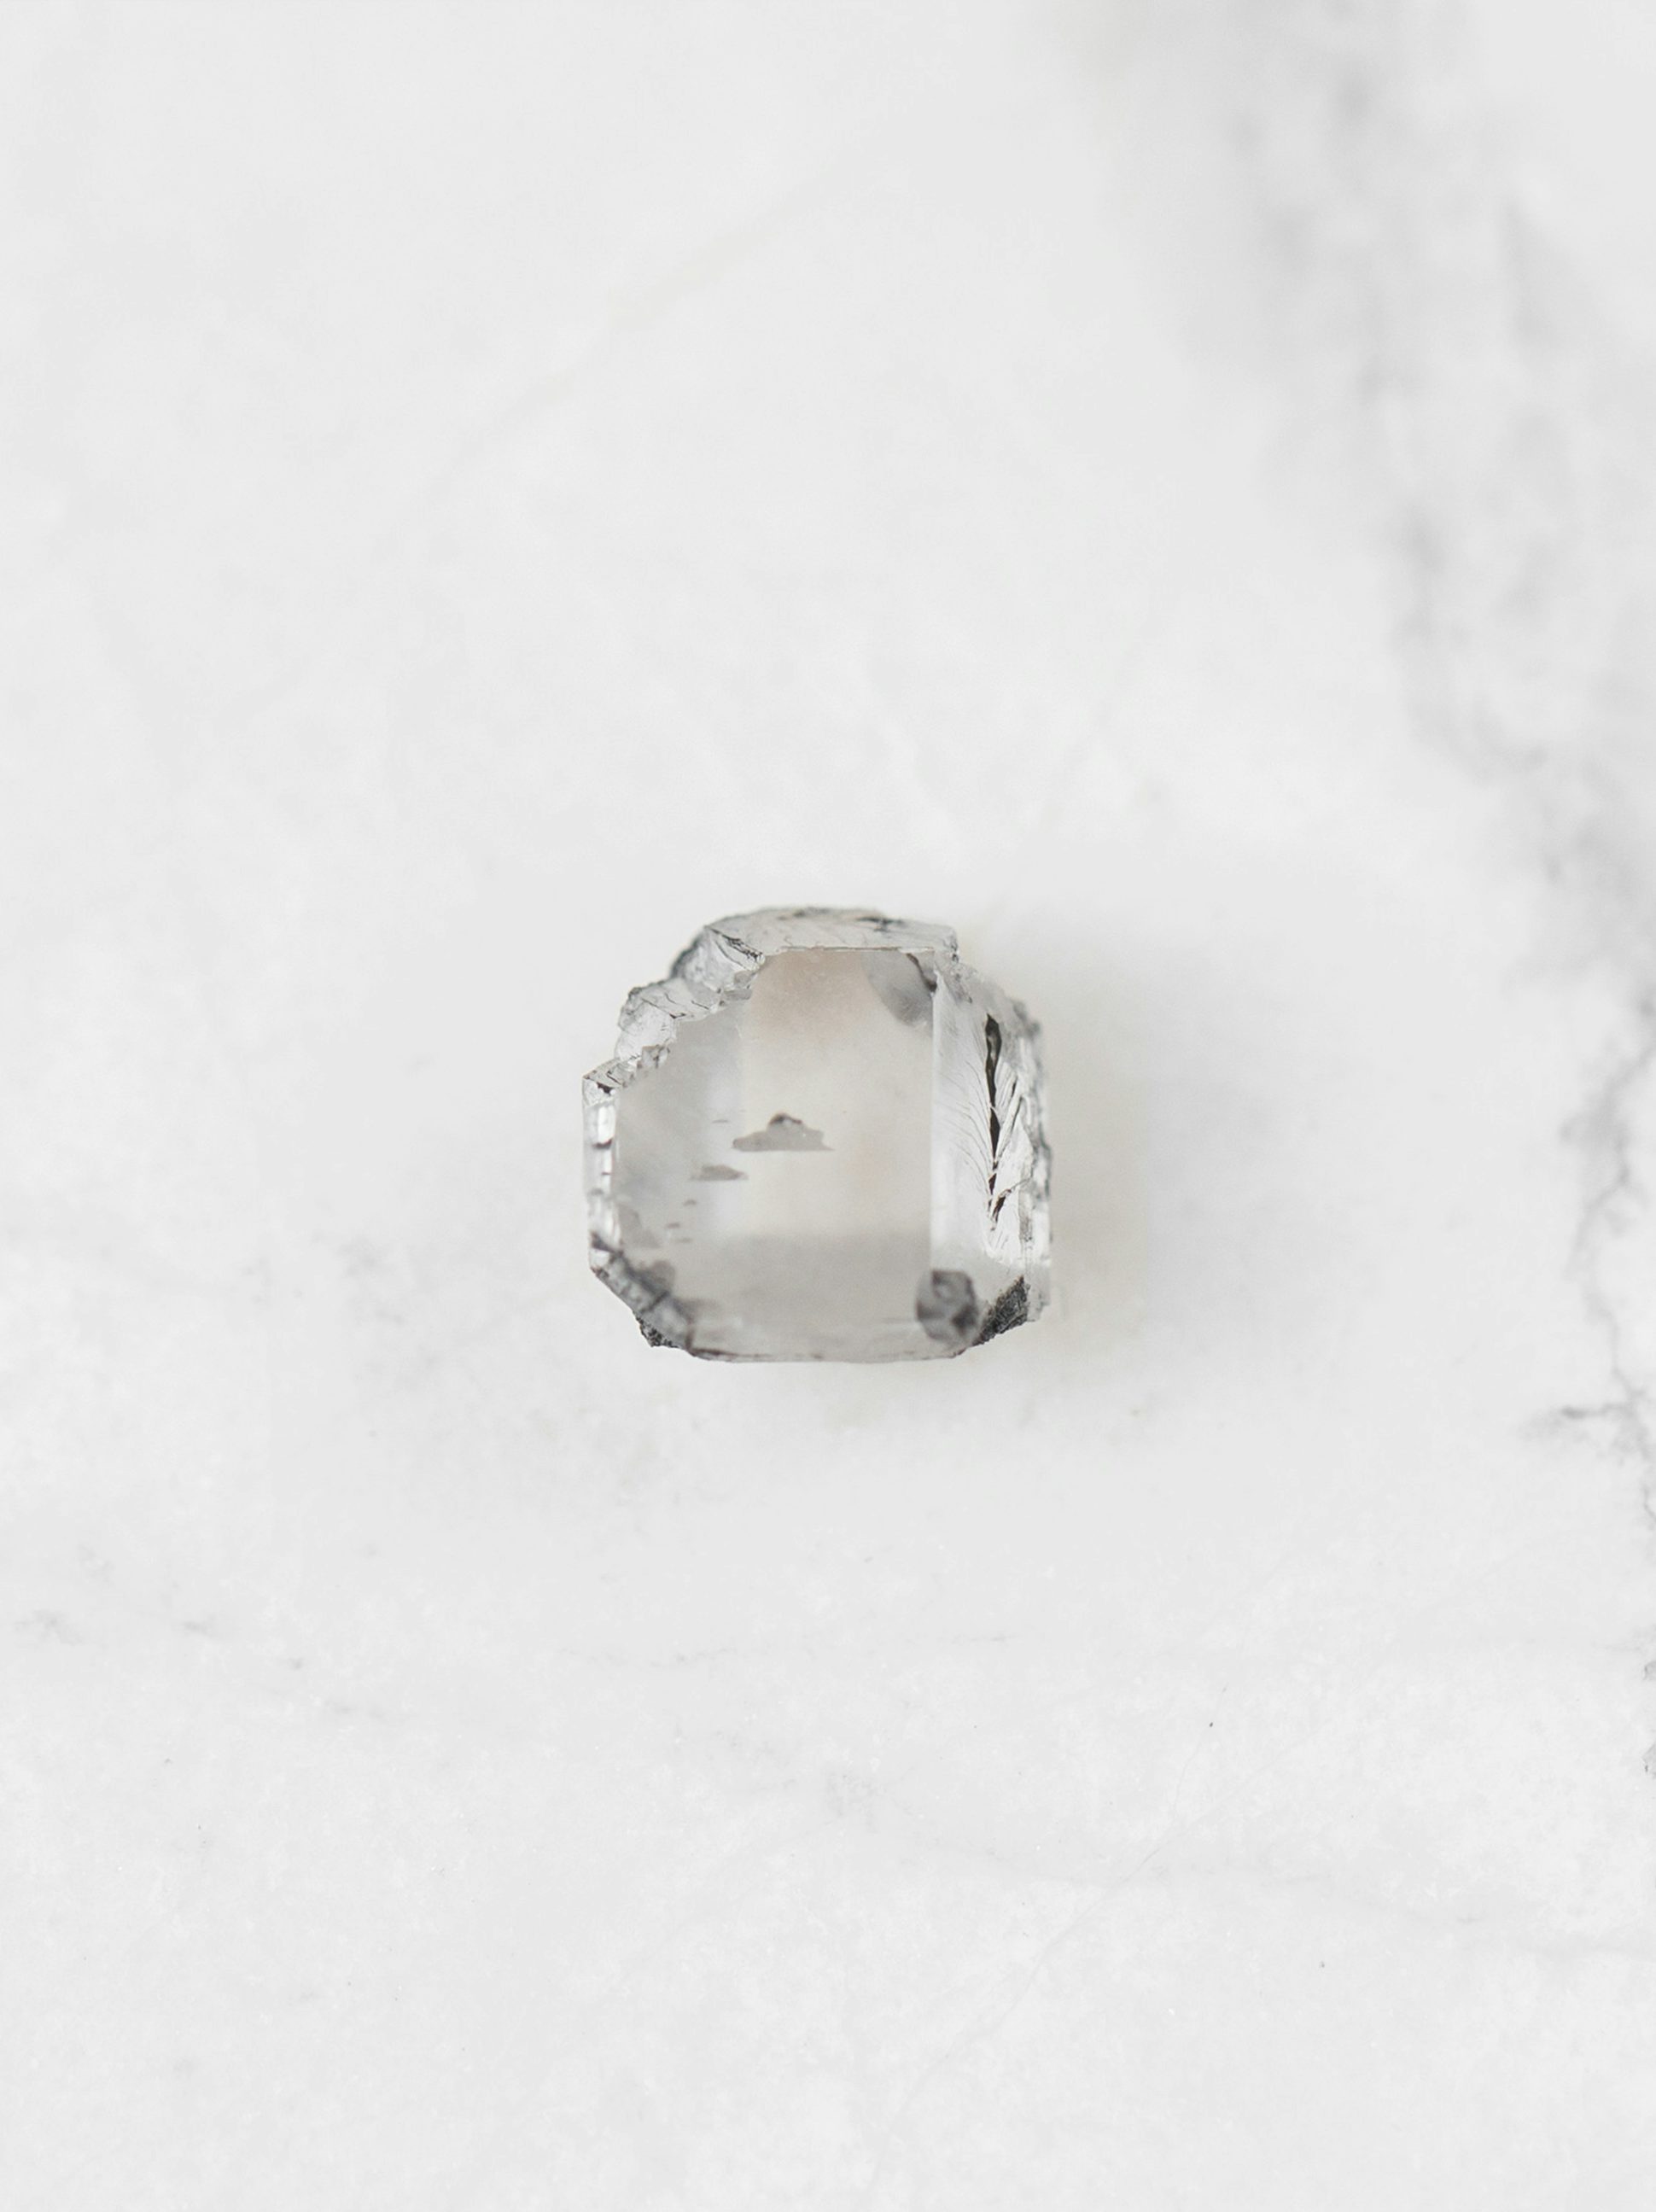 Diamant de synthèse brut - Diamond Foundry